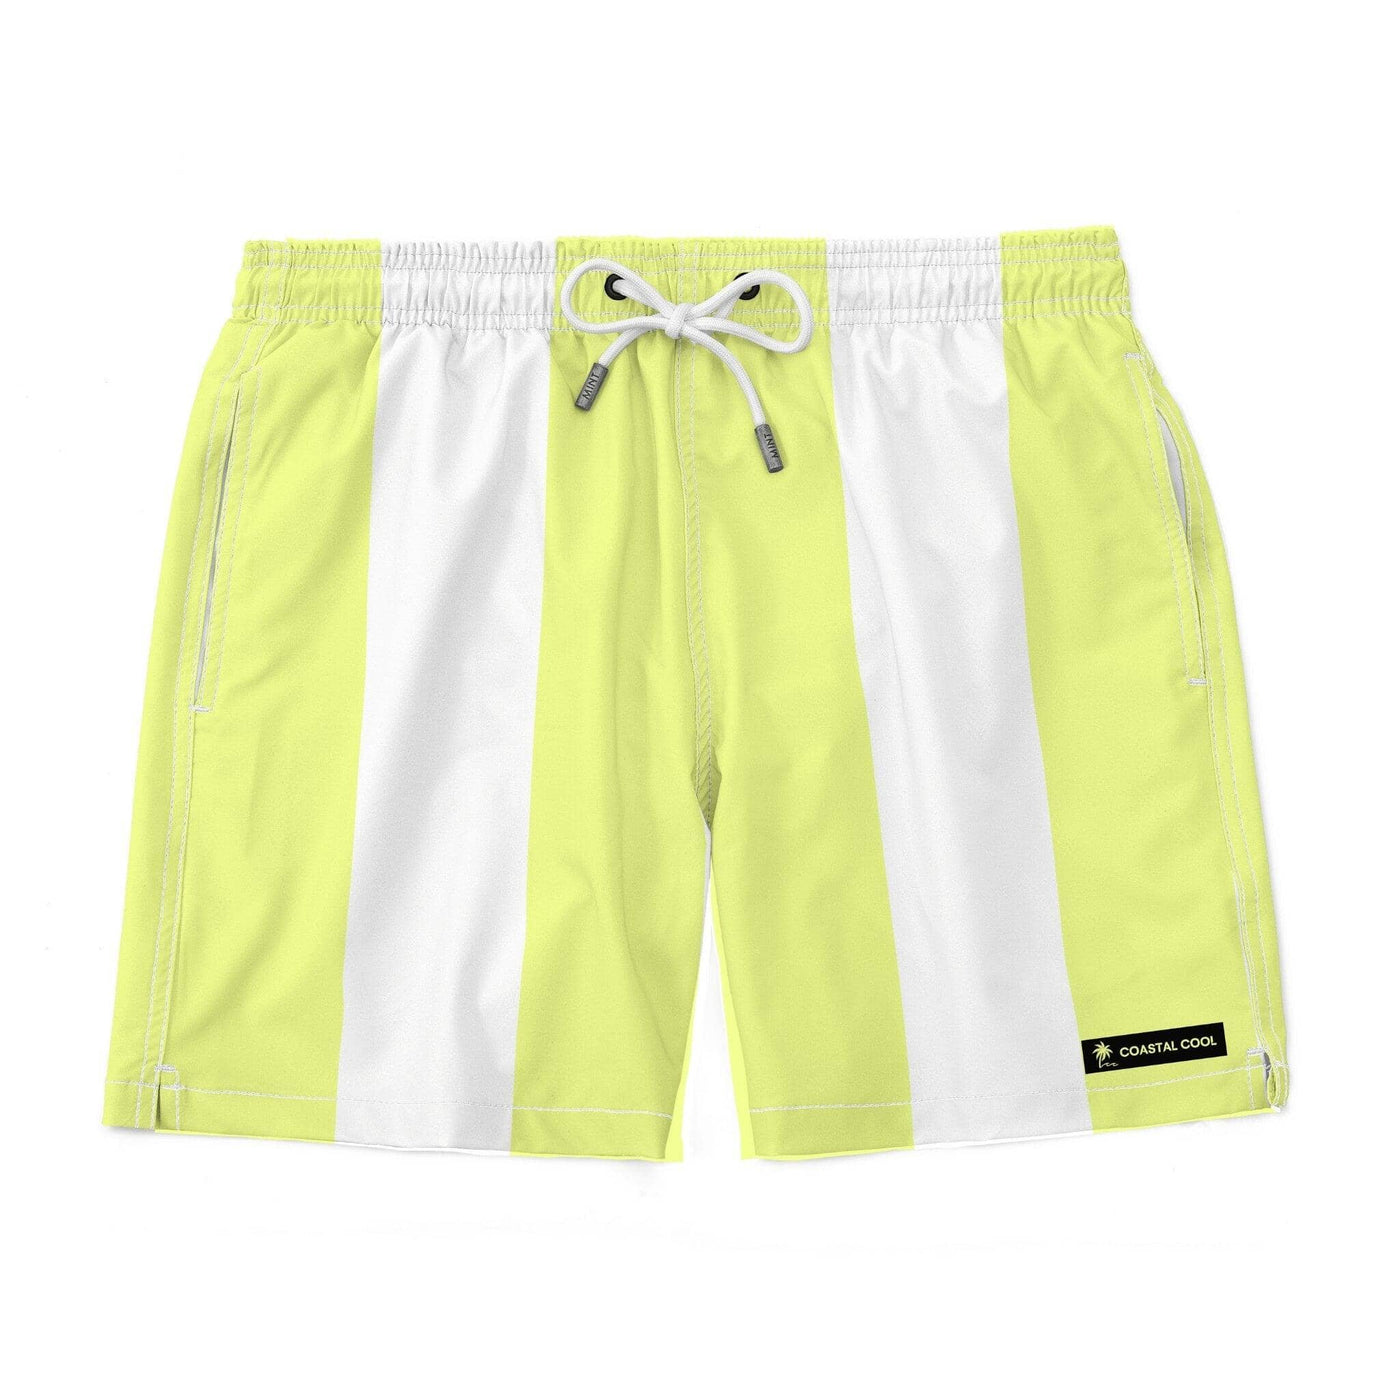 Yellow Striped Swim Trunks - Coastal Cool - Swimwear and Beachwear - Recycled fabrics